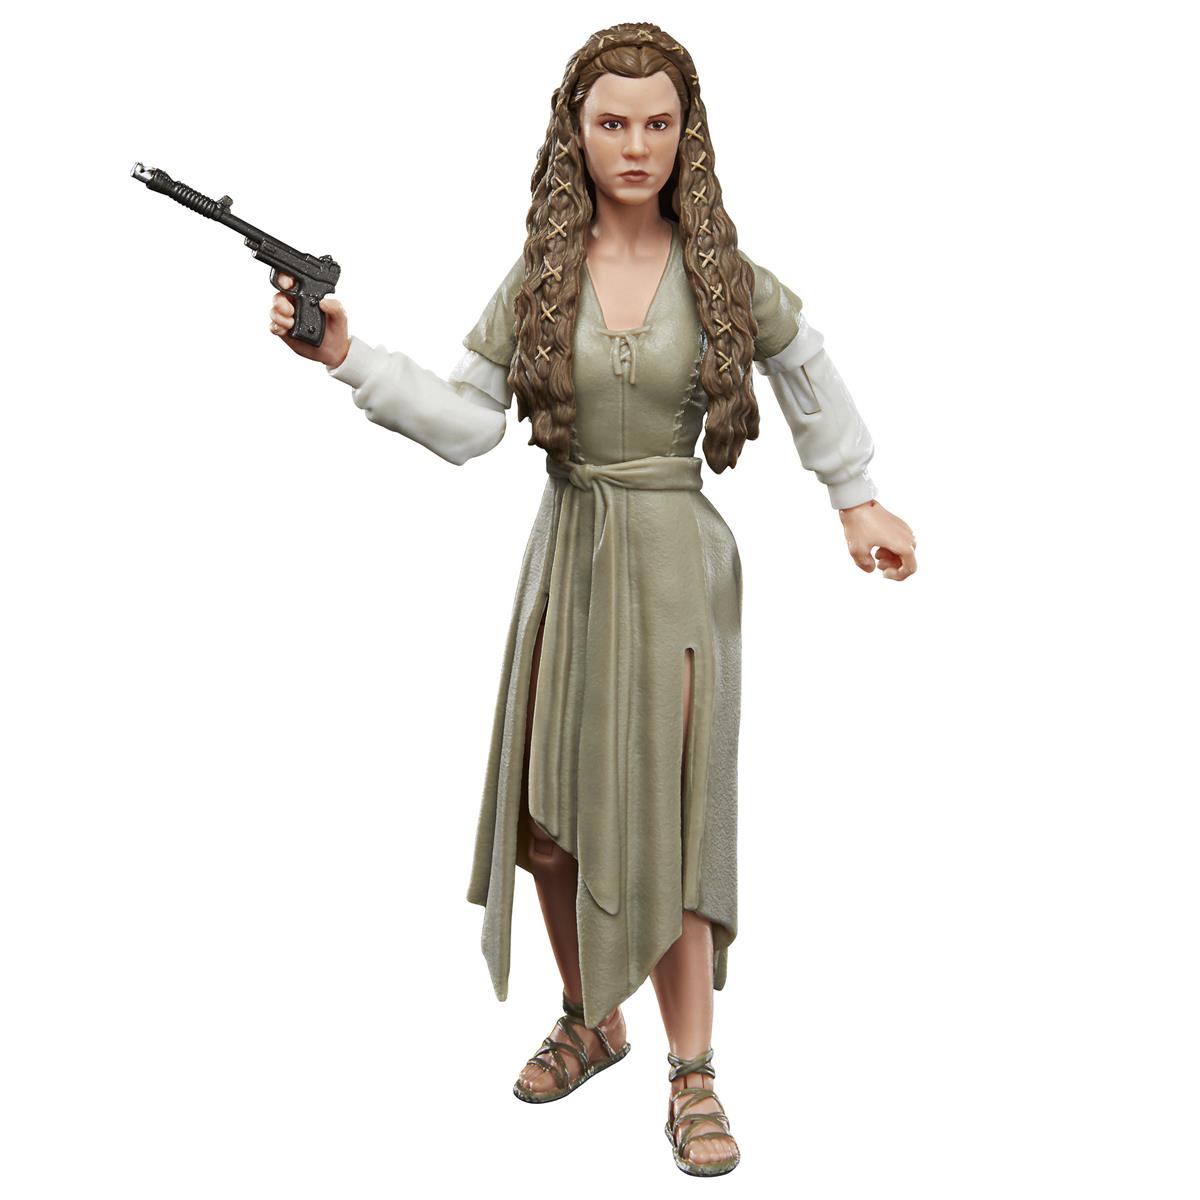 Star Wars Black Series Princess Leia (Ewok Village) Action Figure